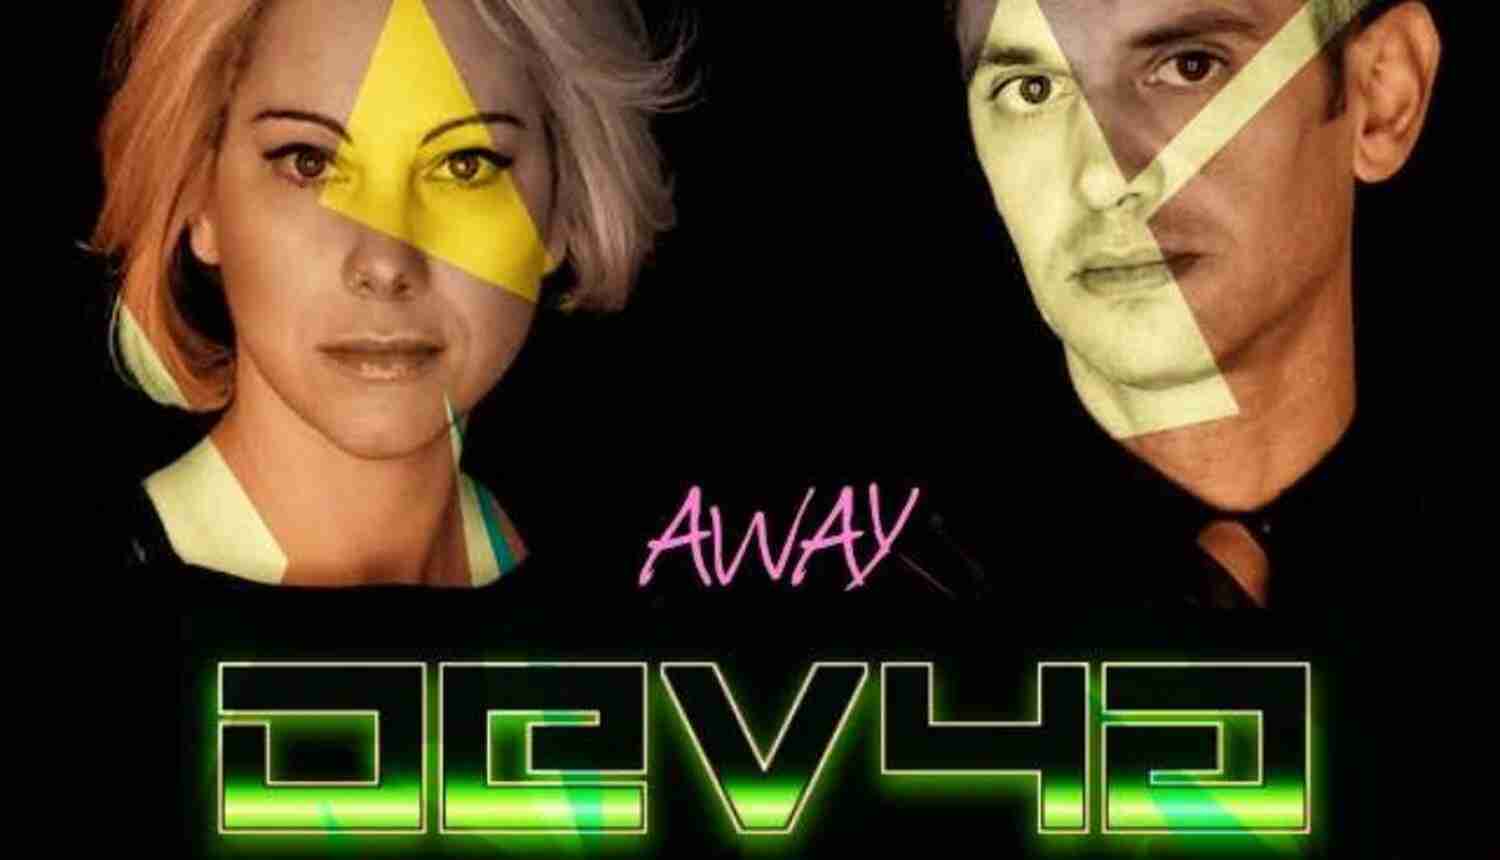 DEVYA - AWAY White Dolphin Records